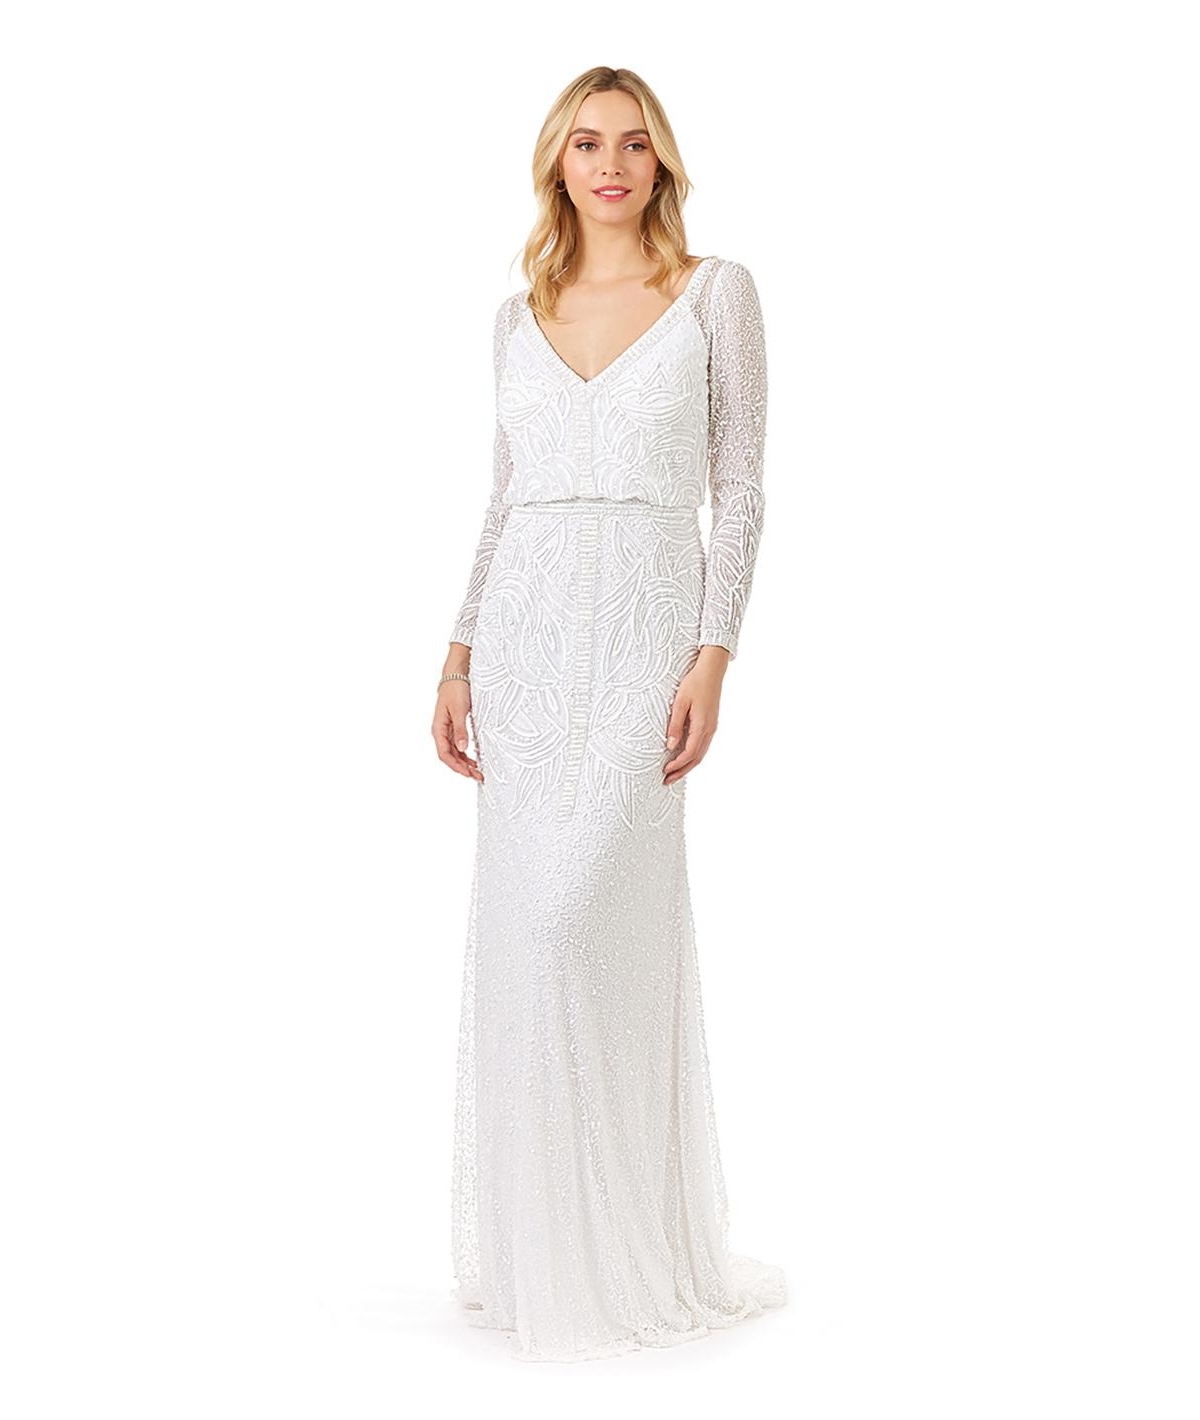 1930s Style Wedding Dresses | Art Deco Wedding Dress Womens Grant Long Sleeve Beaded Wedding Dress - Ivory $598.00 AT vintagedancer.com